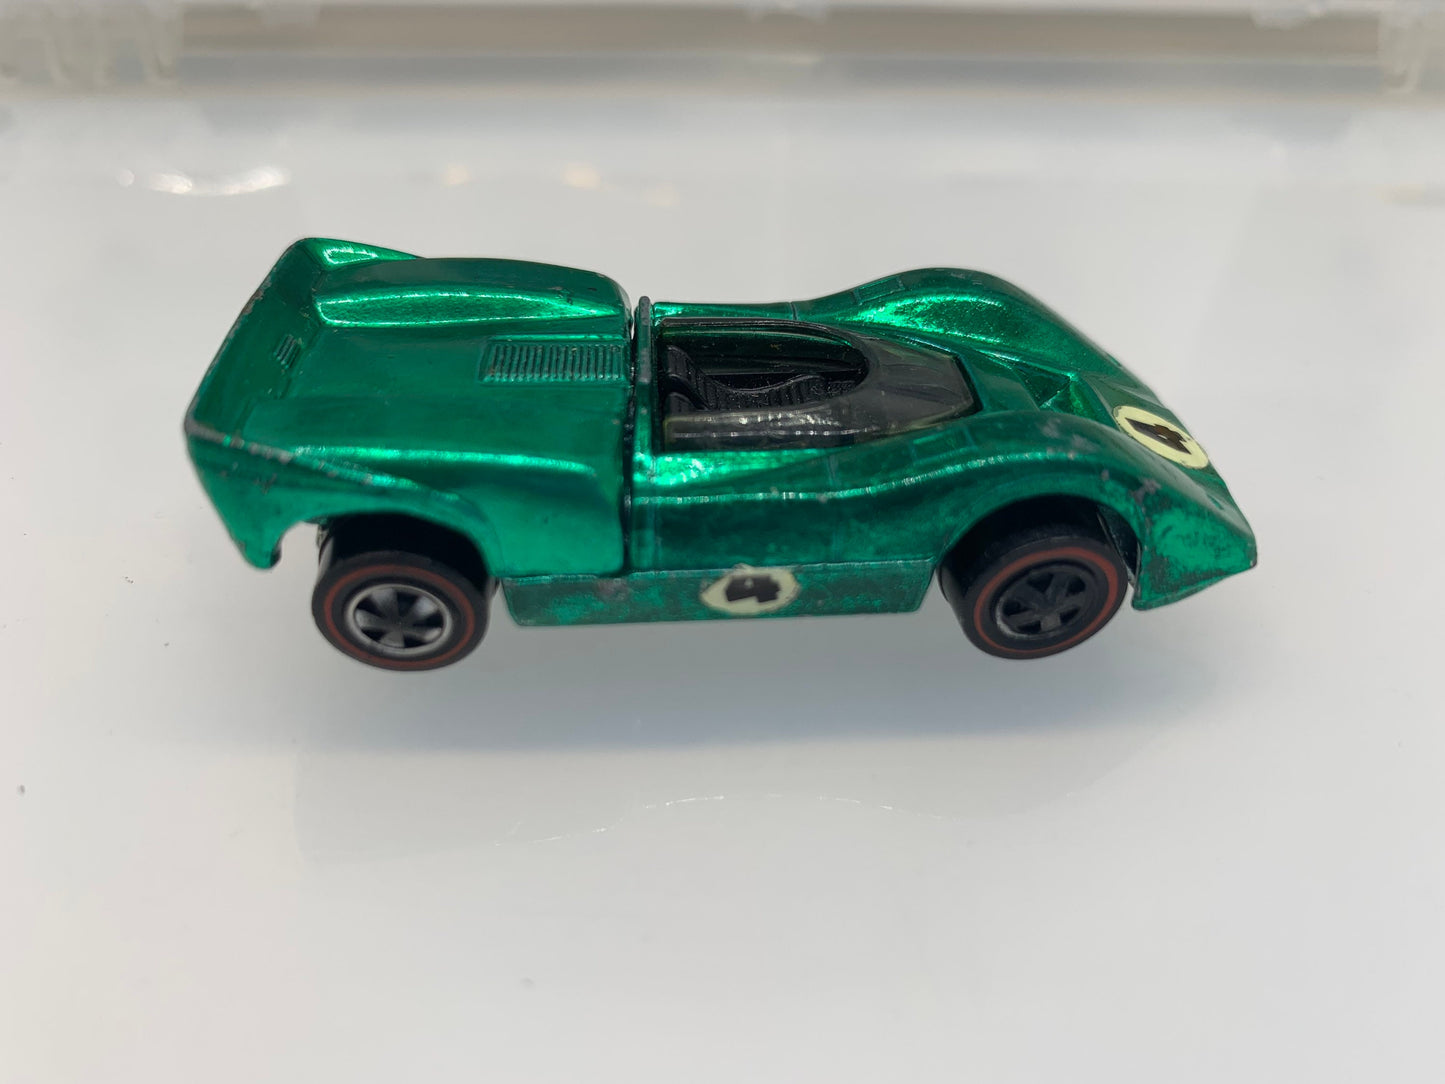 Hot Wheels Redline McLaren M6A Green - 1960s Toy - Vintage Diecast Metal Toy Car - Vintage Hot Wheels